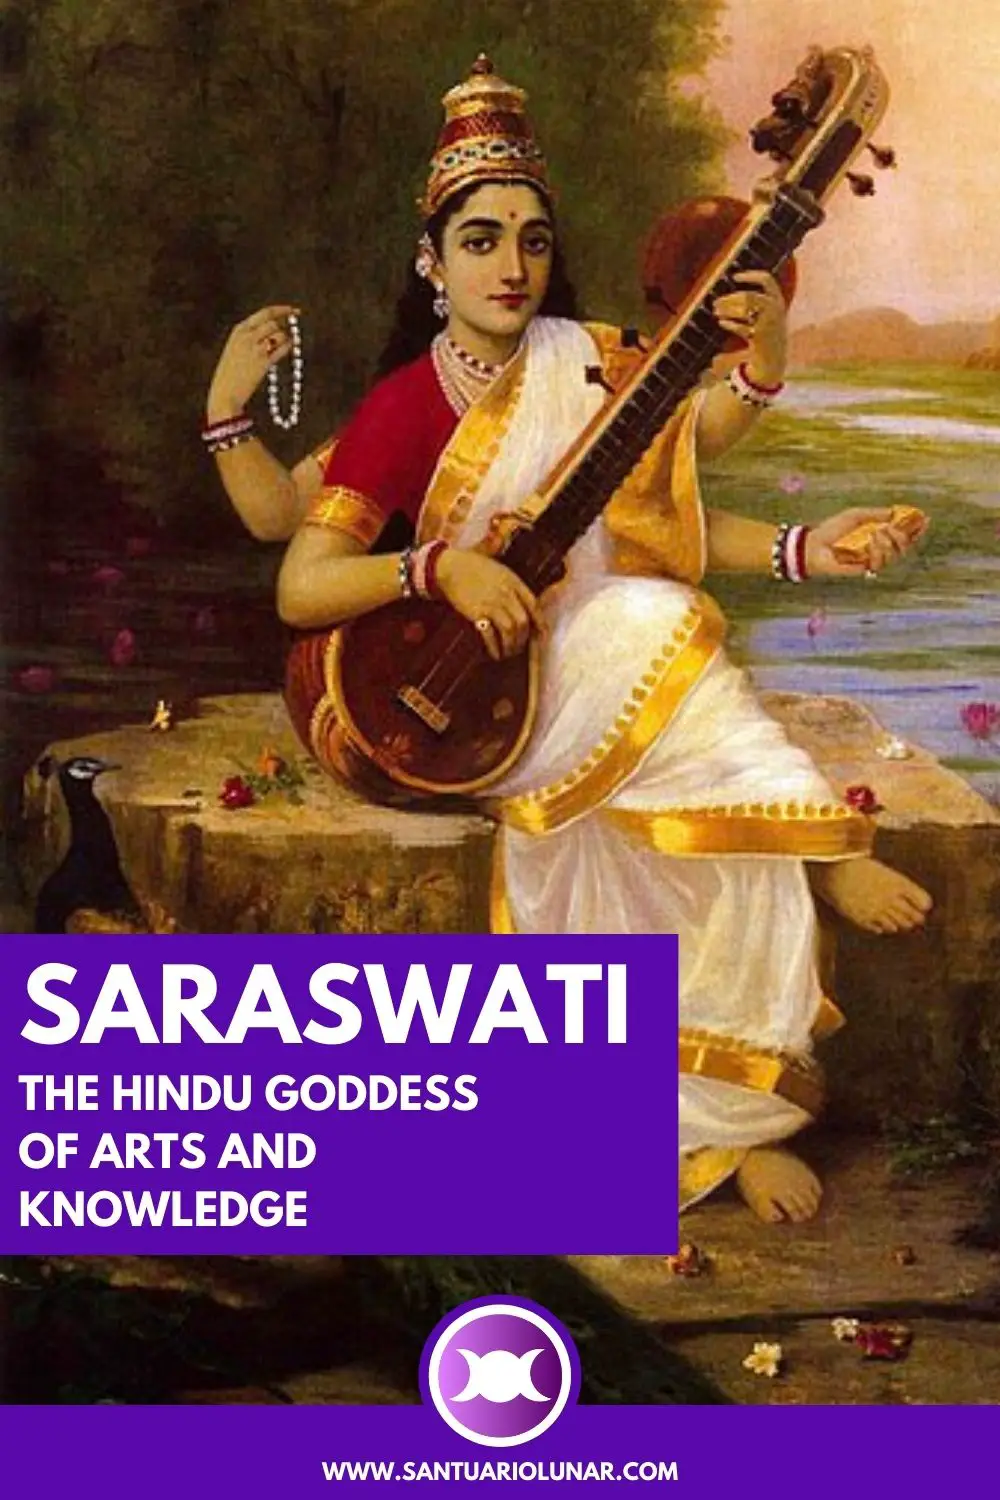 A serious Saraswati painting for Pinterest